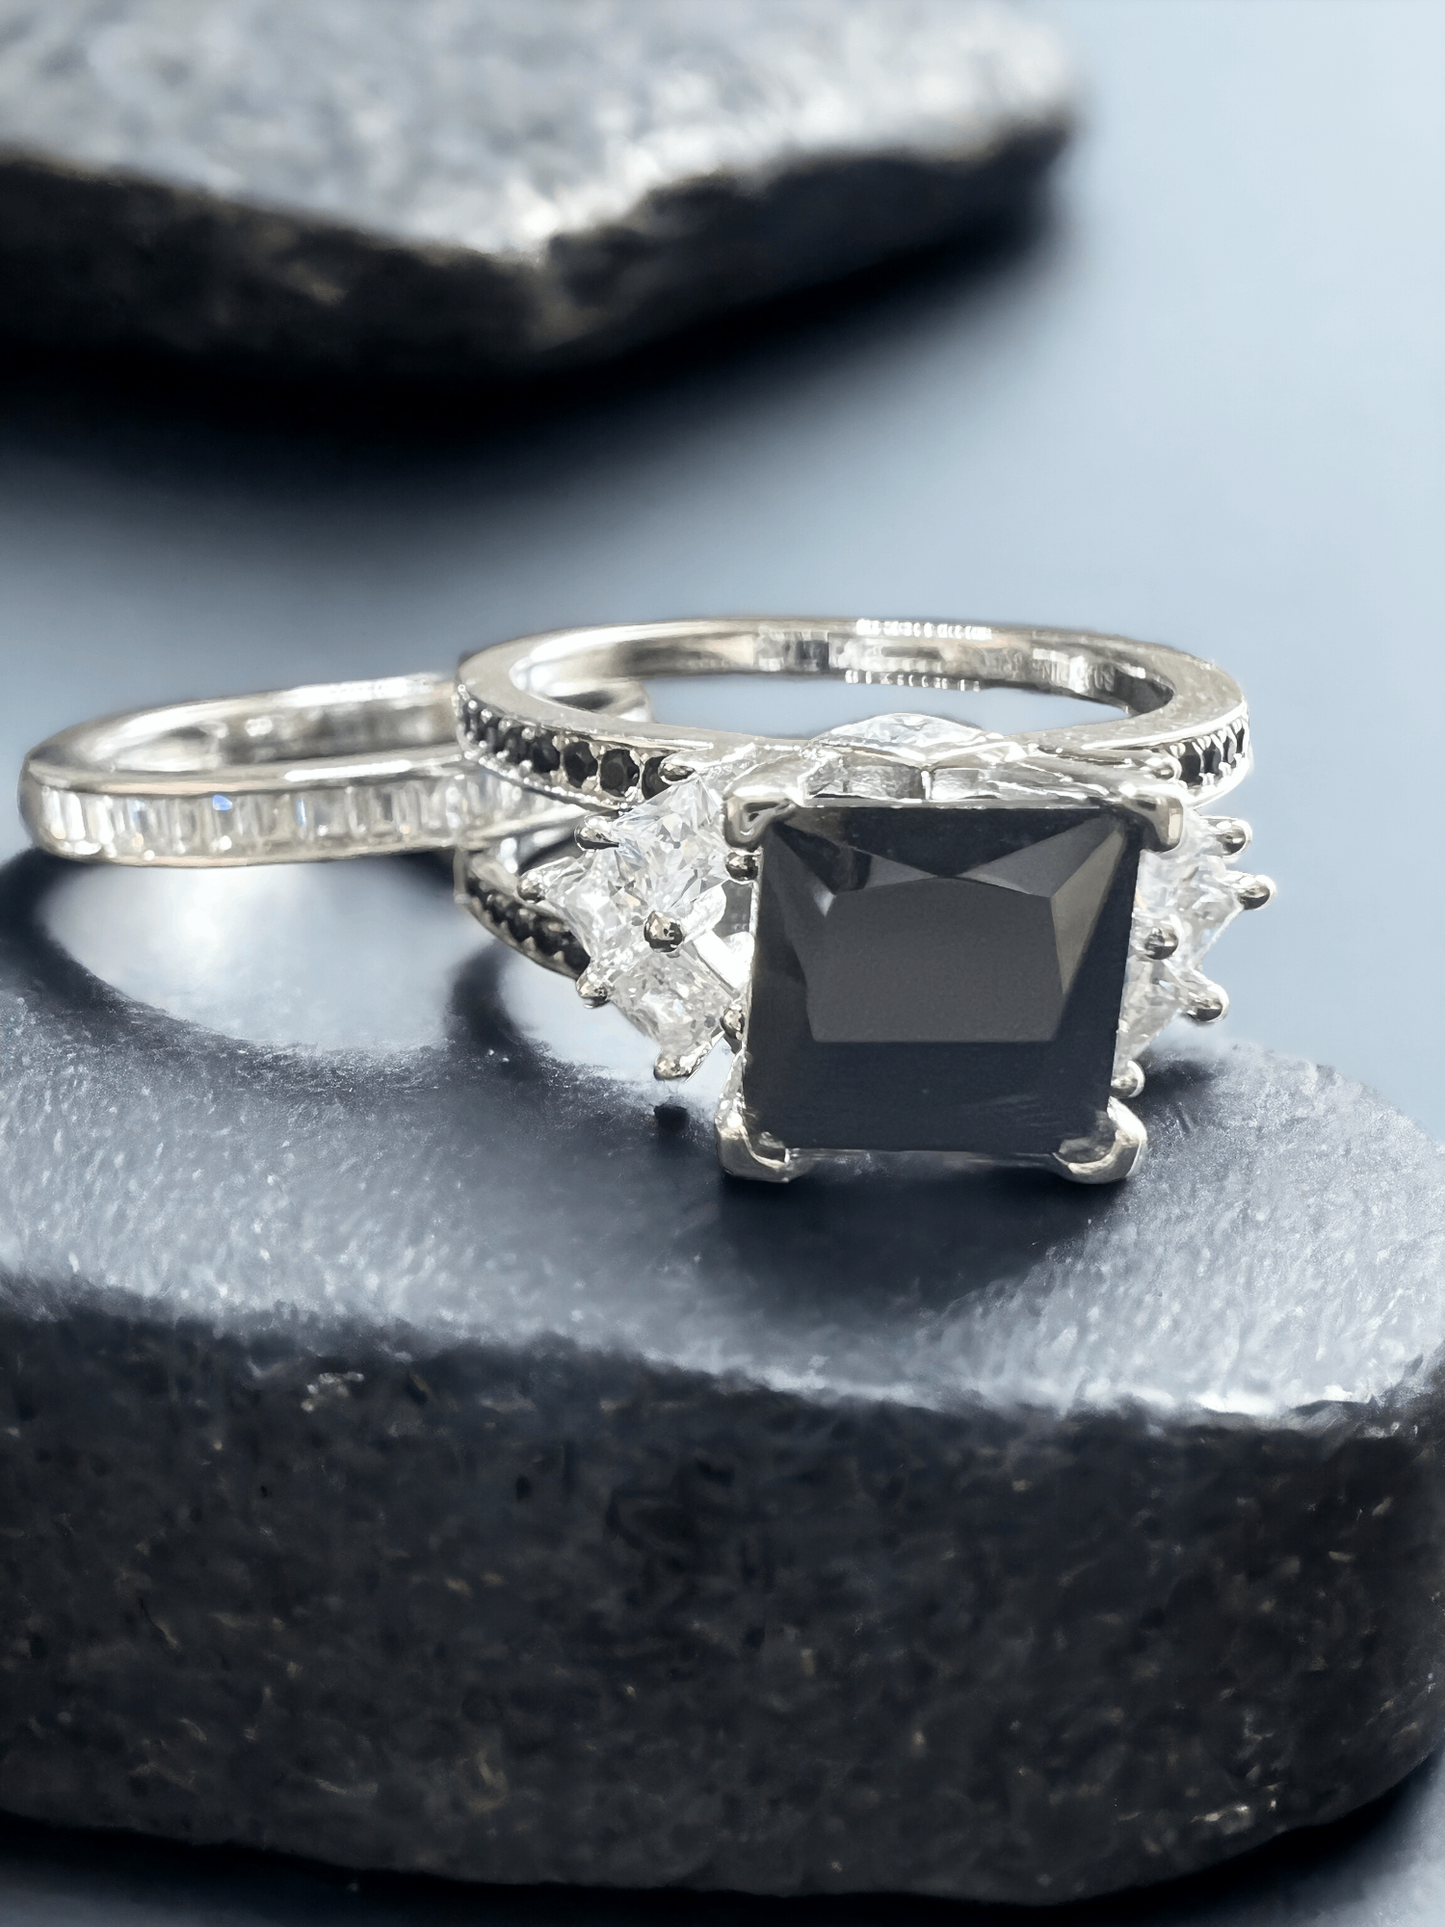 925 Sterling Silver Princess Cut, Black Onyx & Clear CZ Tri-Band Ring